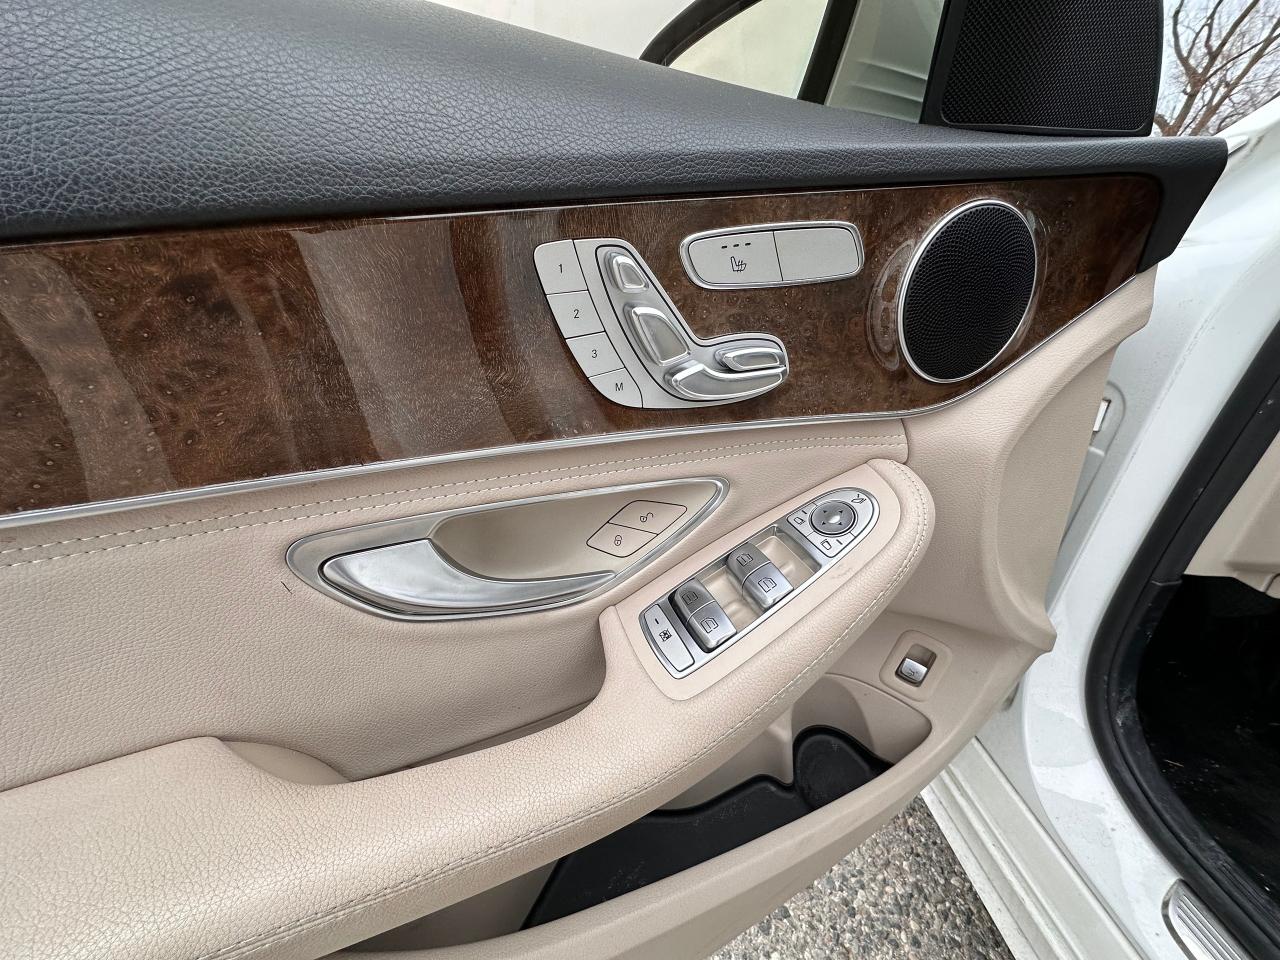 2015 Mercedes-Benz C-Class Navigation, C 300 4MATIC - Photo #25